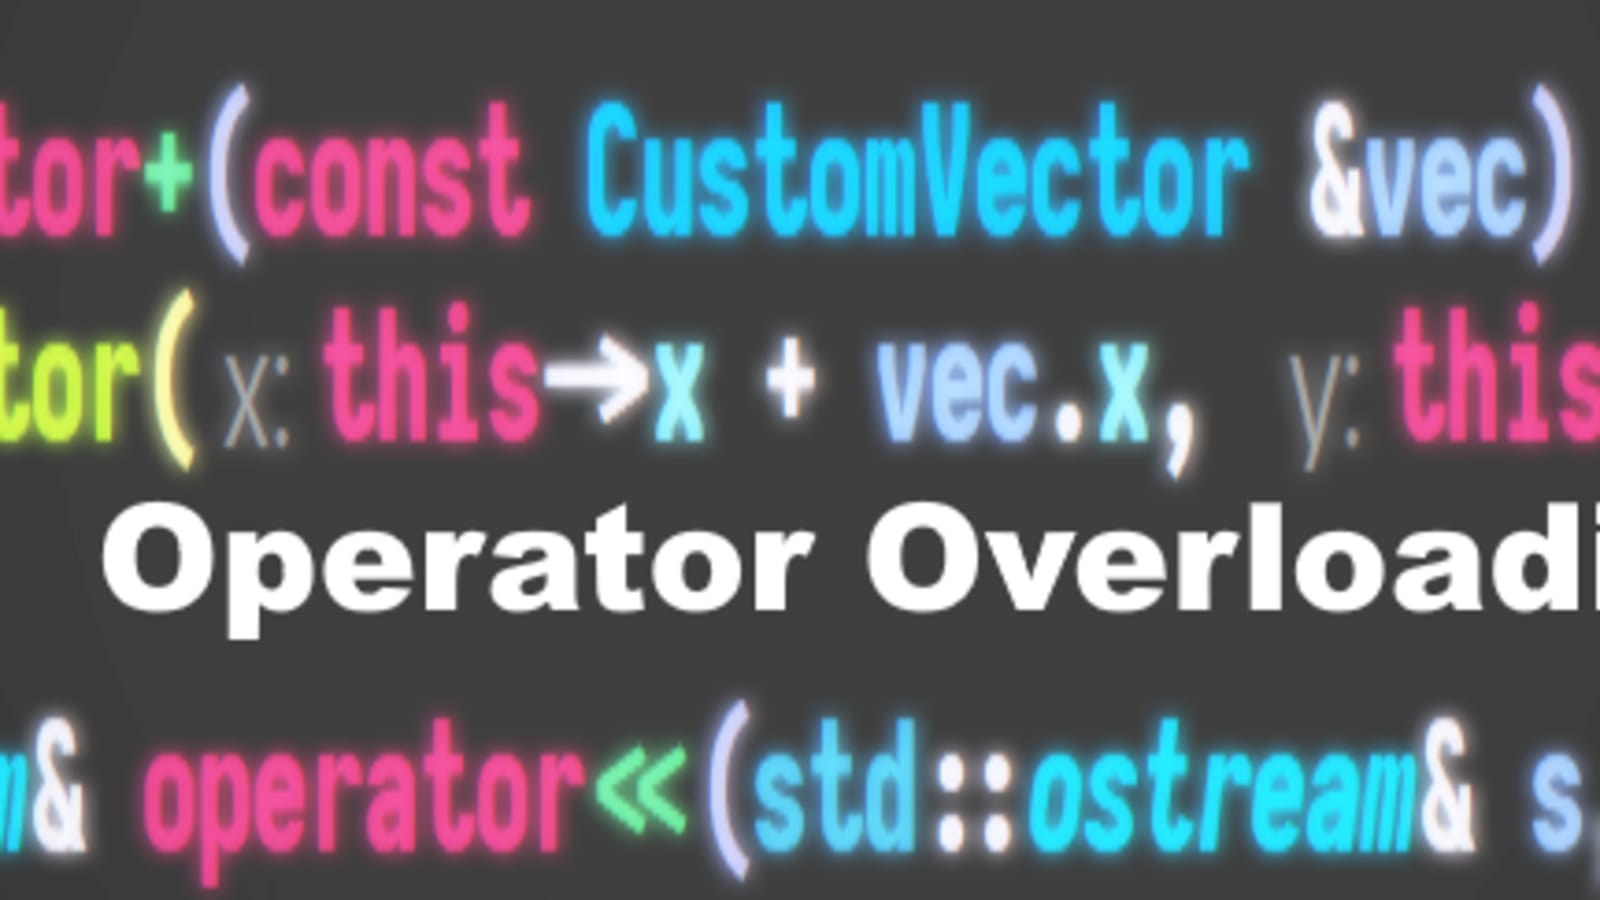 C++ Programming: Operator Overloading - DEV Community